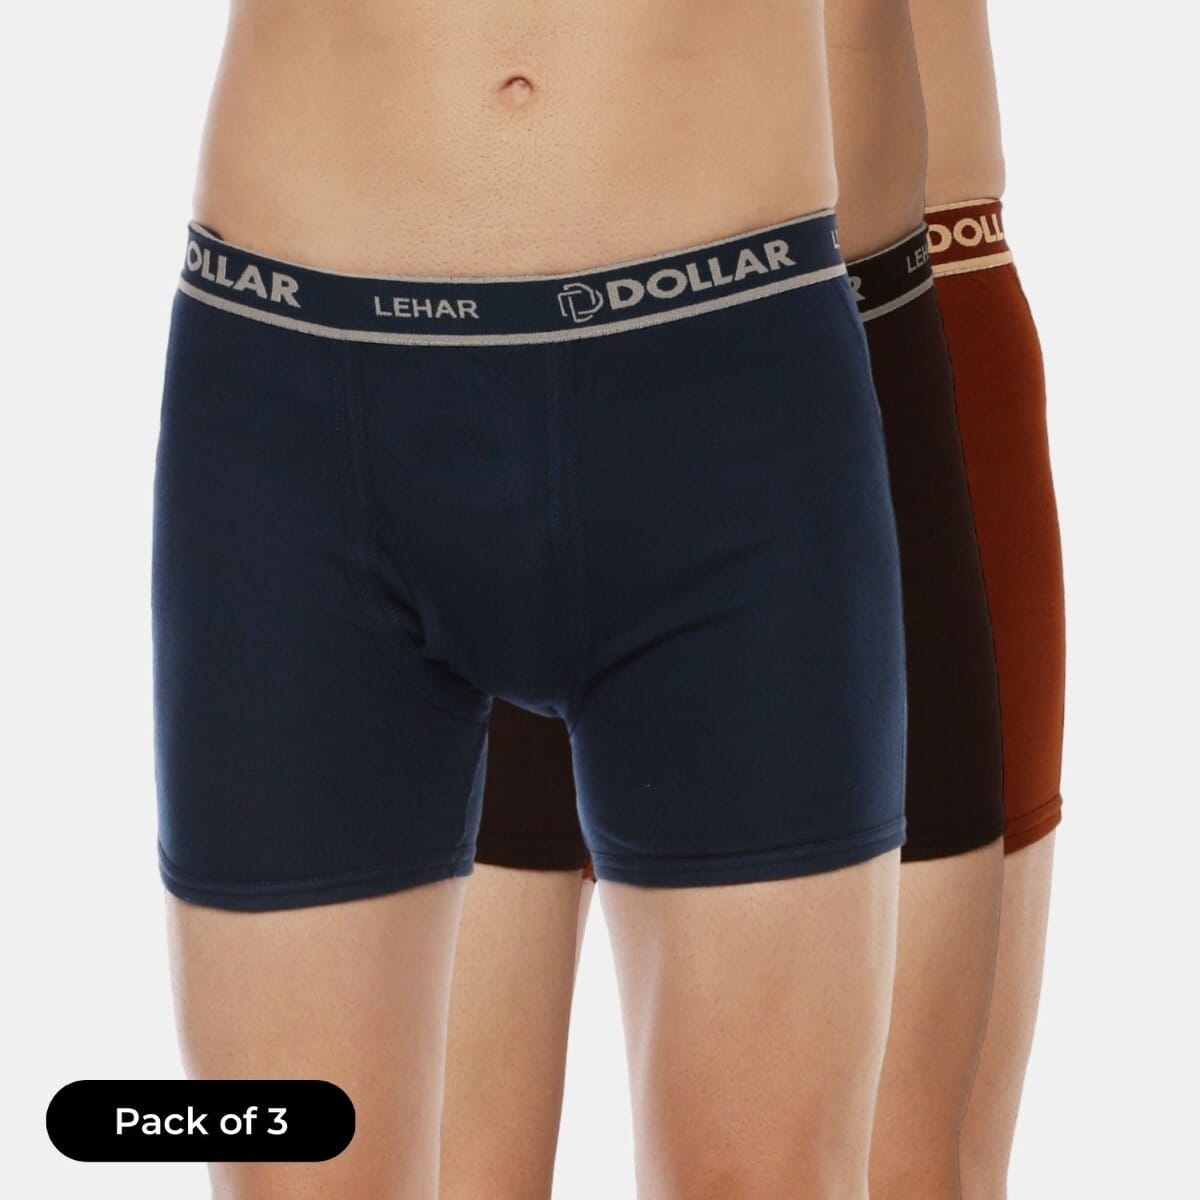 Pack of 3) Dollar Men Interlock Comfy Cotton Boxer Brief Underwear Colors  Vary, Underwear For Men